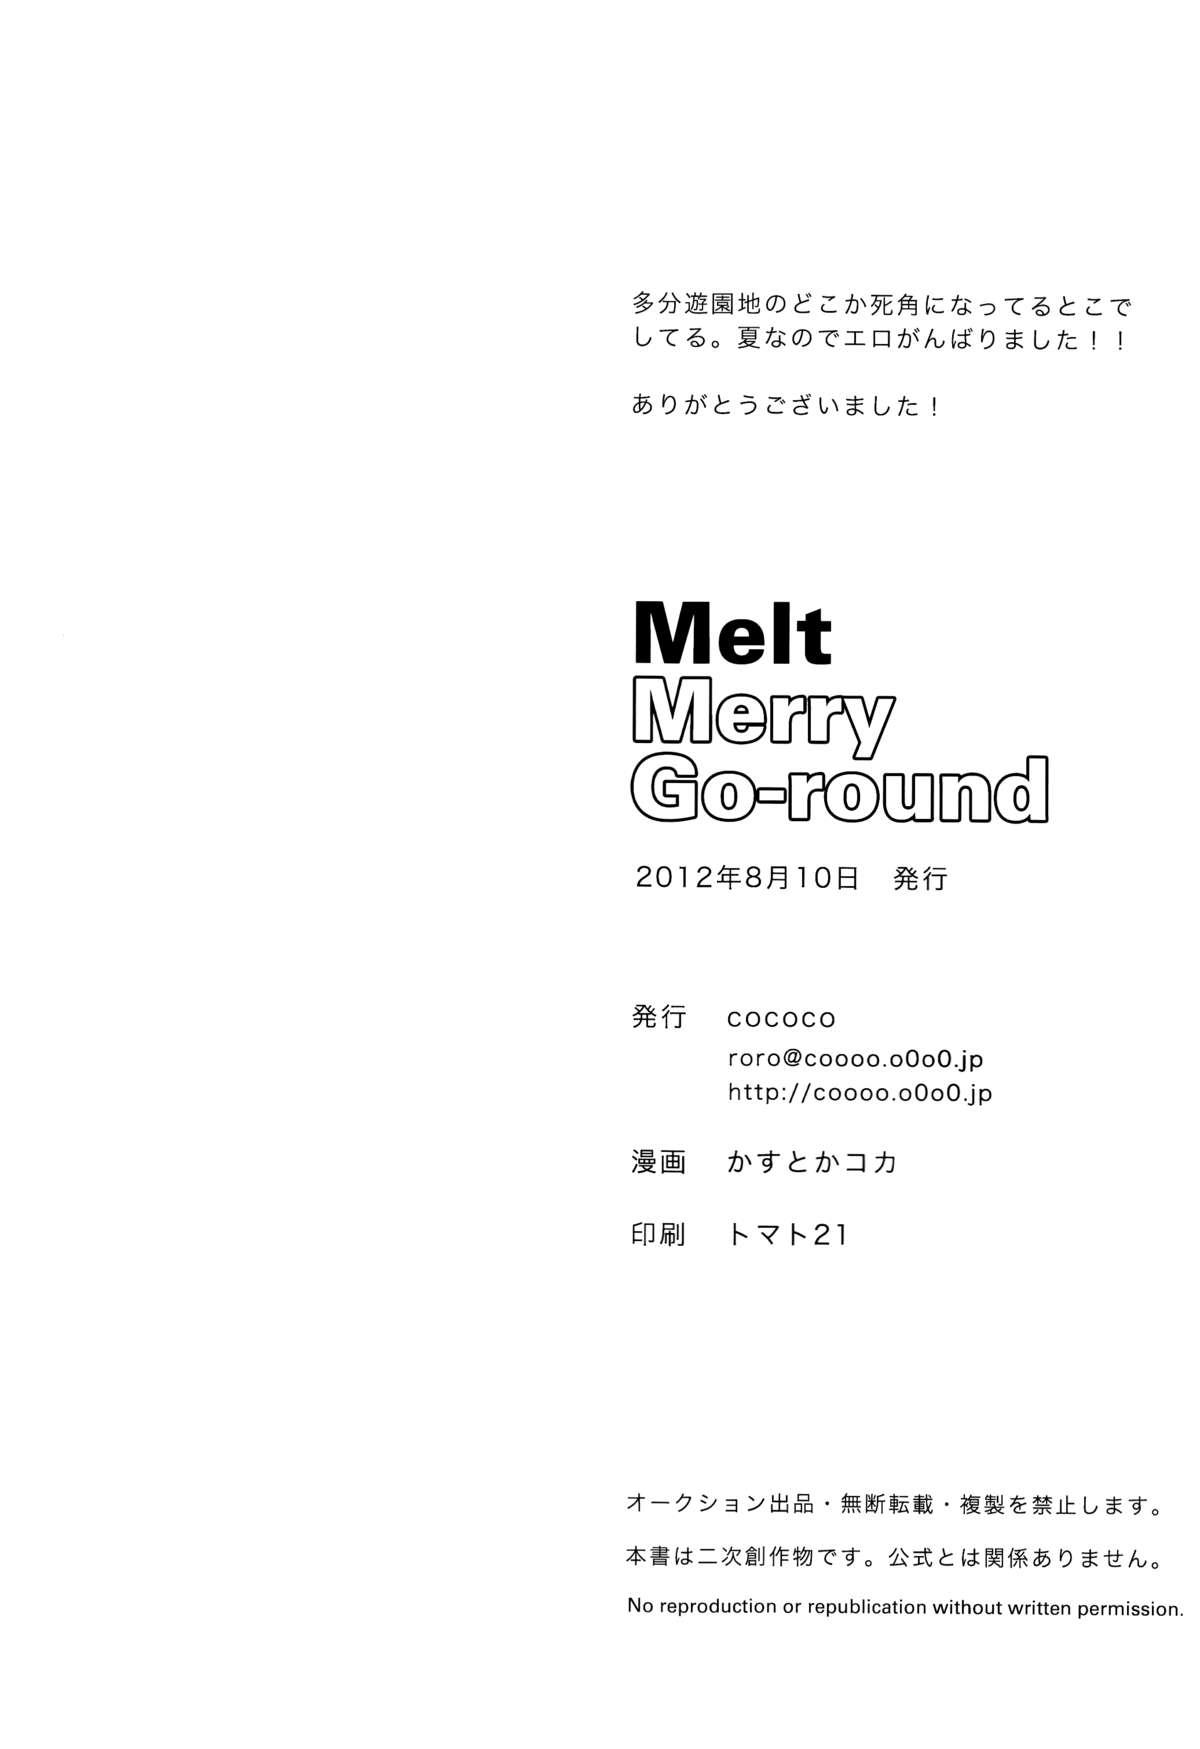 Melt merry go-round 25